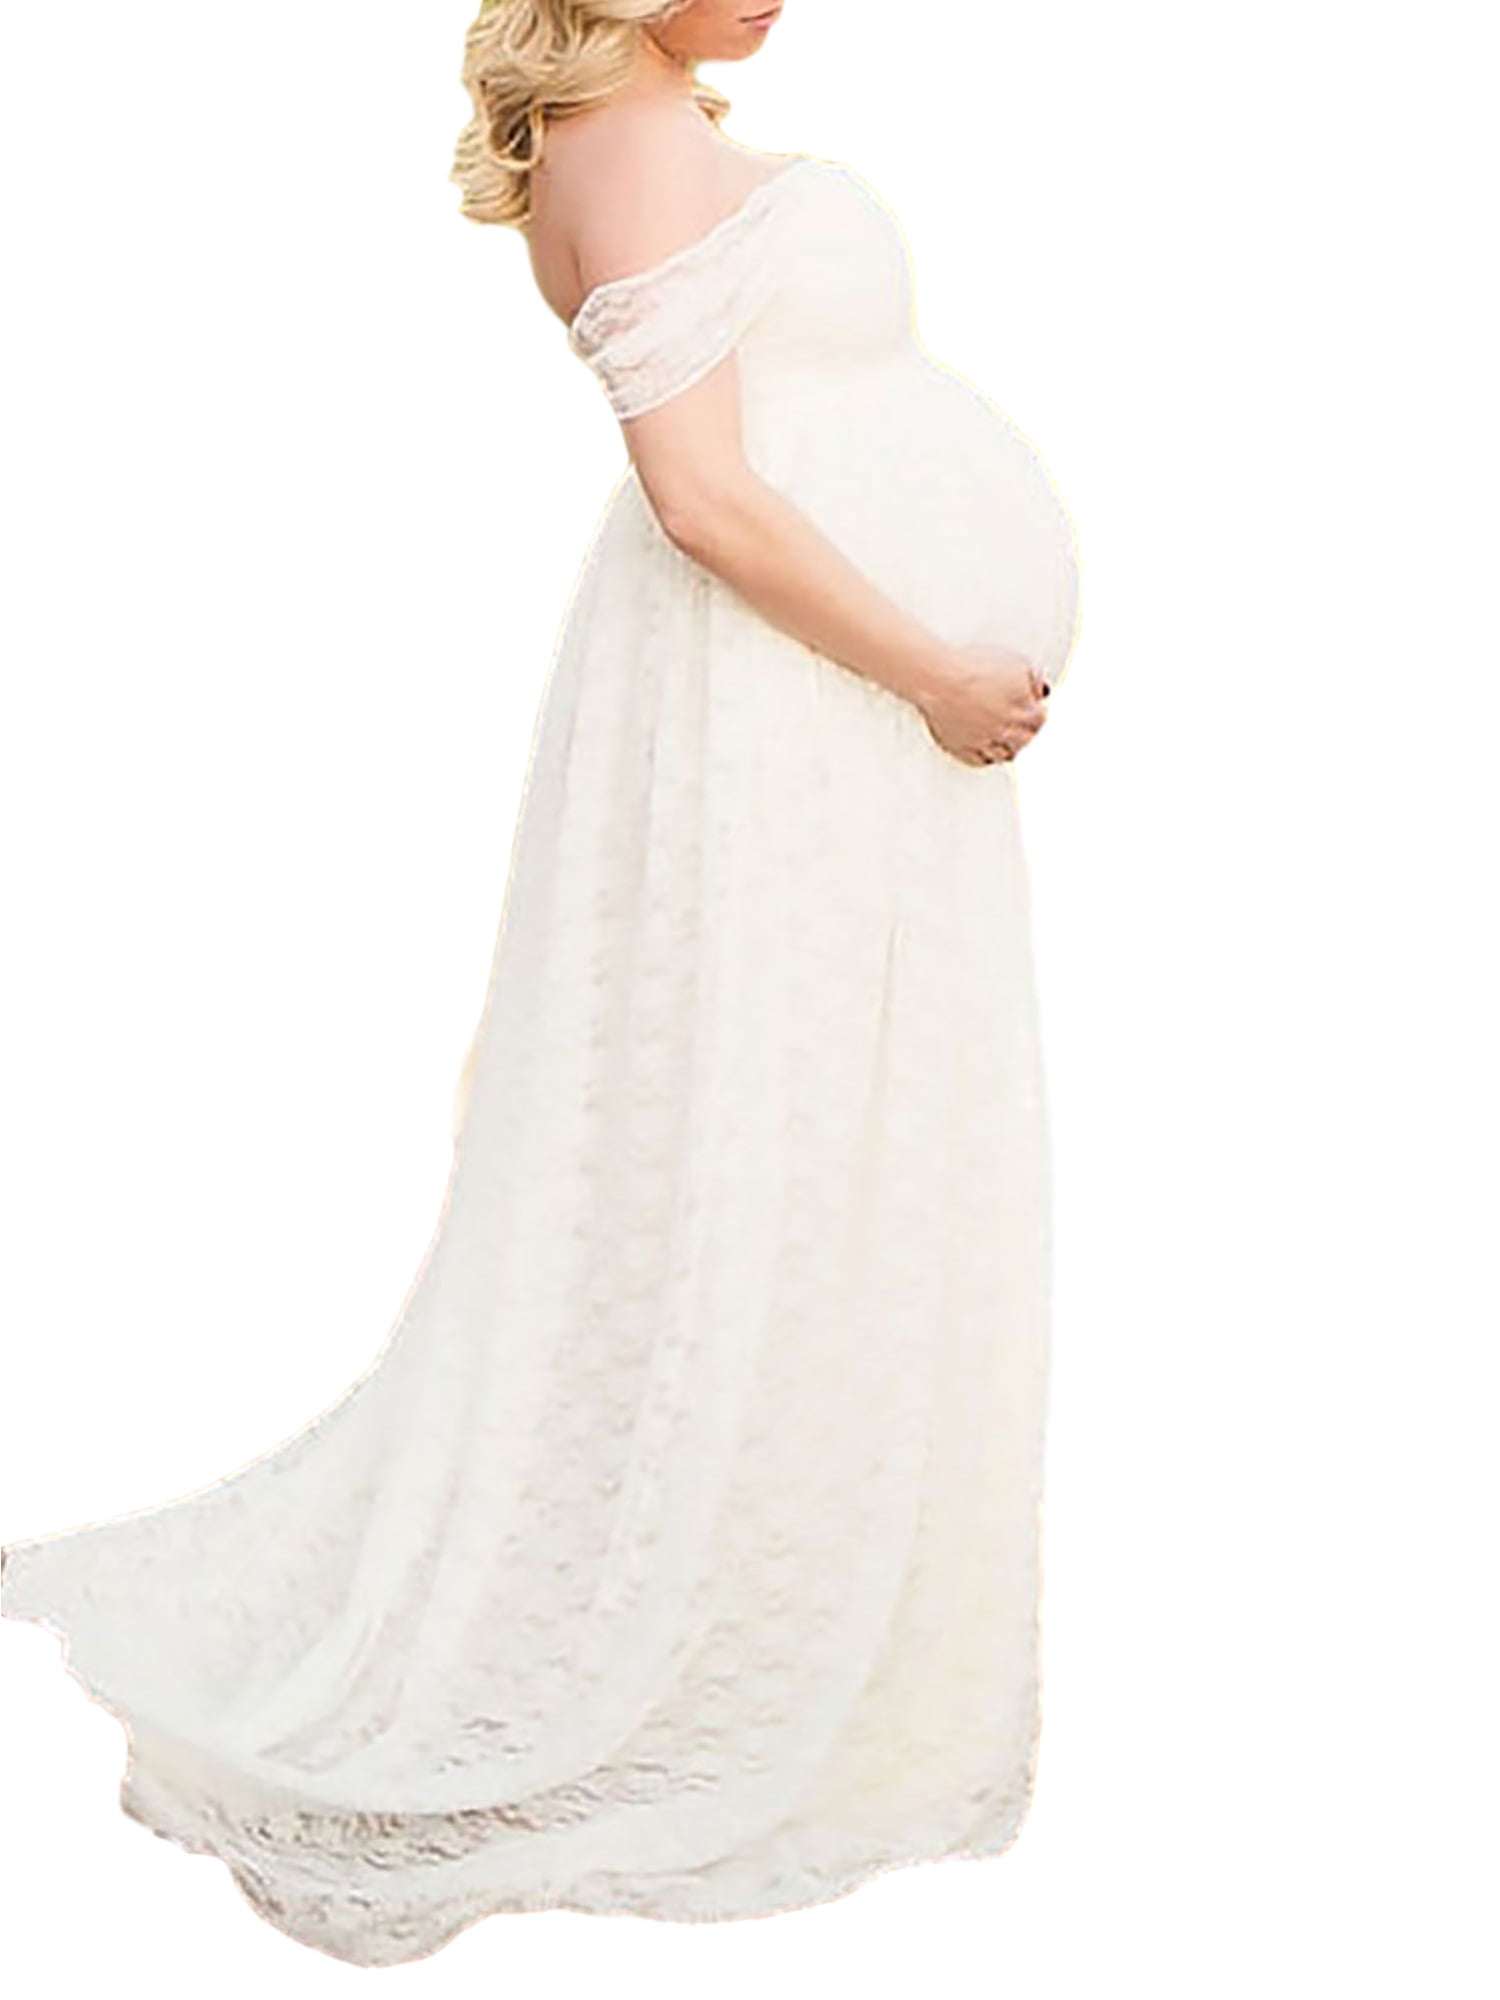 Selfieee - Selfieee Women's Maternity Dress Fitted Off Shoulder Baby ...